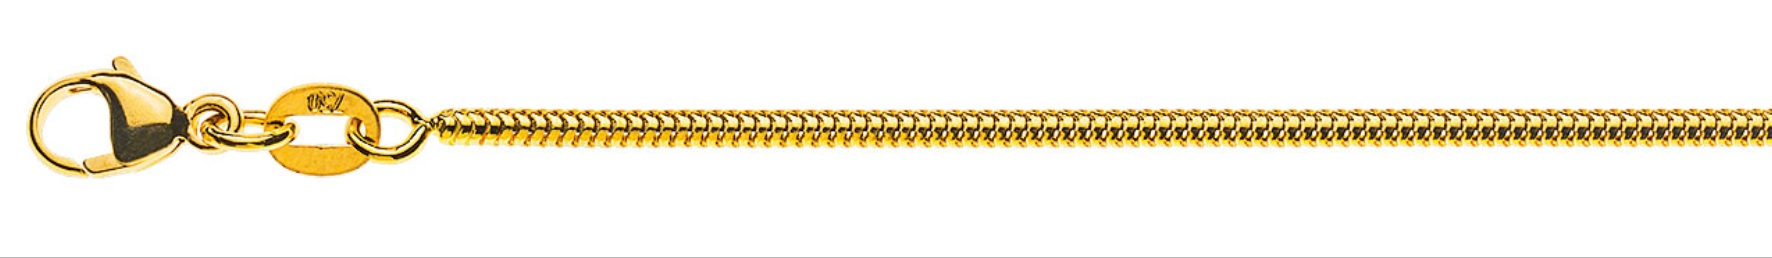 AURONOS Prestige Necklace yellow gold 18K snake chain 40cm 1.6mm